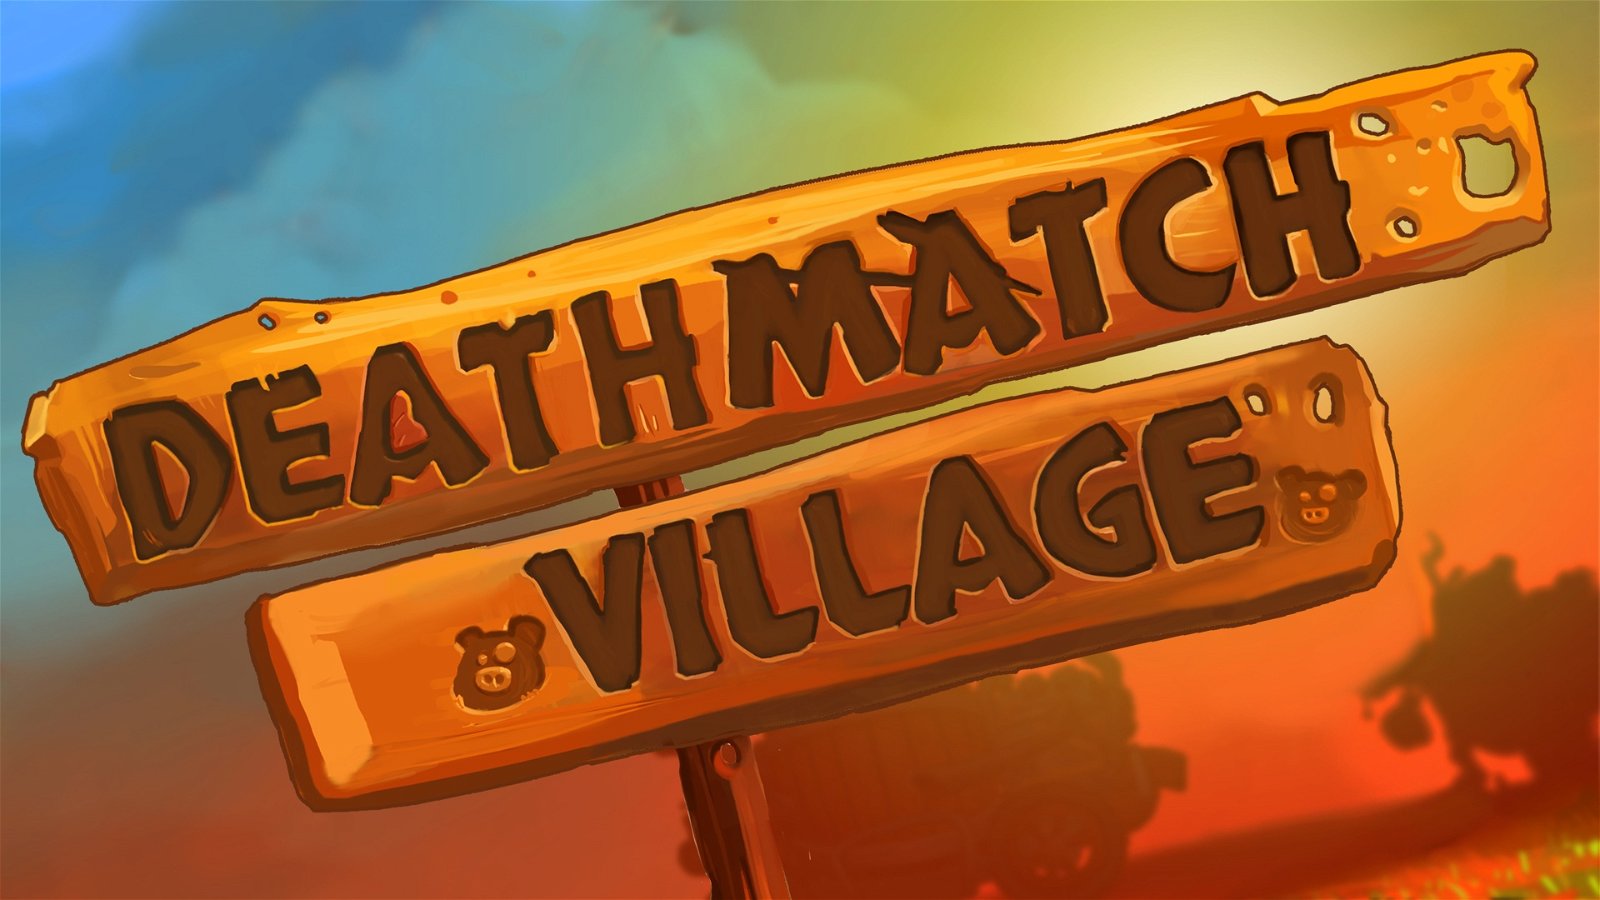 Image of Deathmatch Village